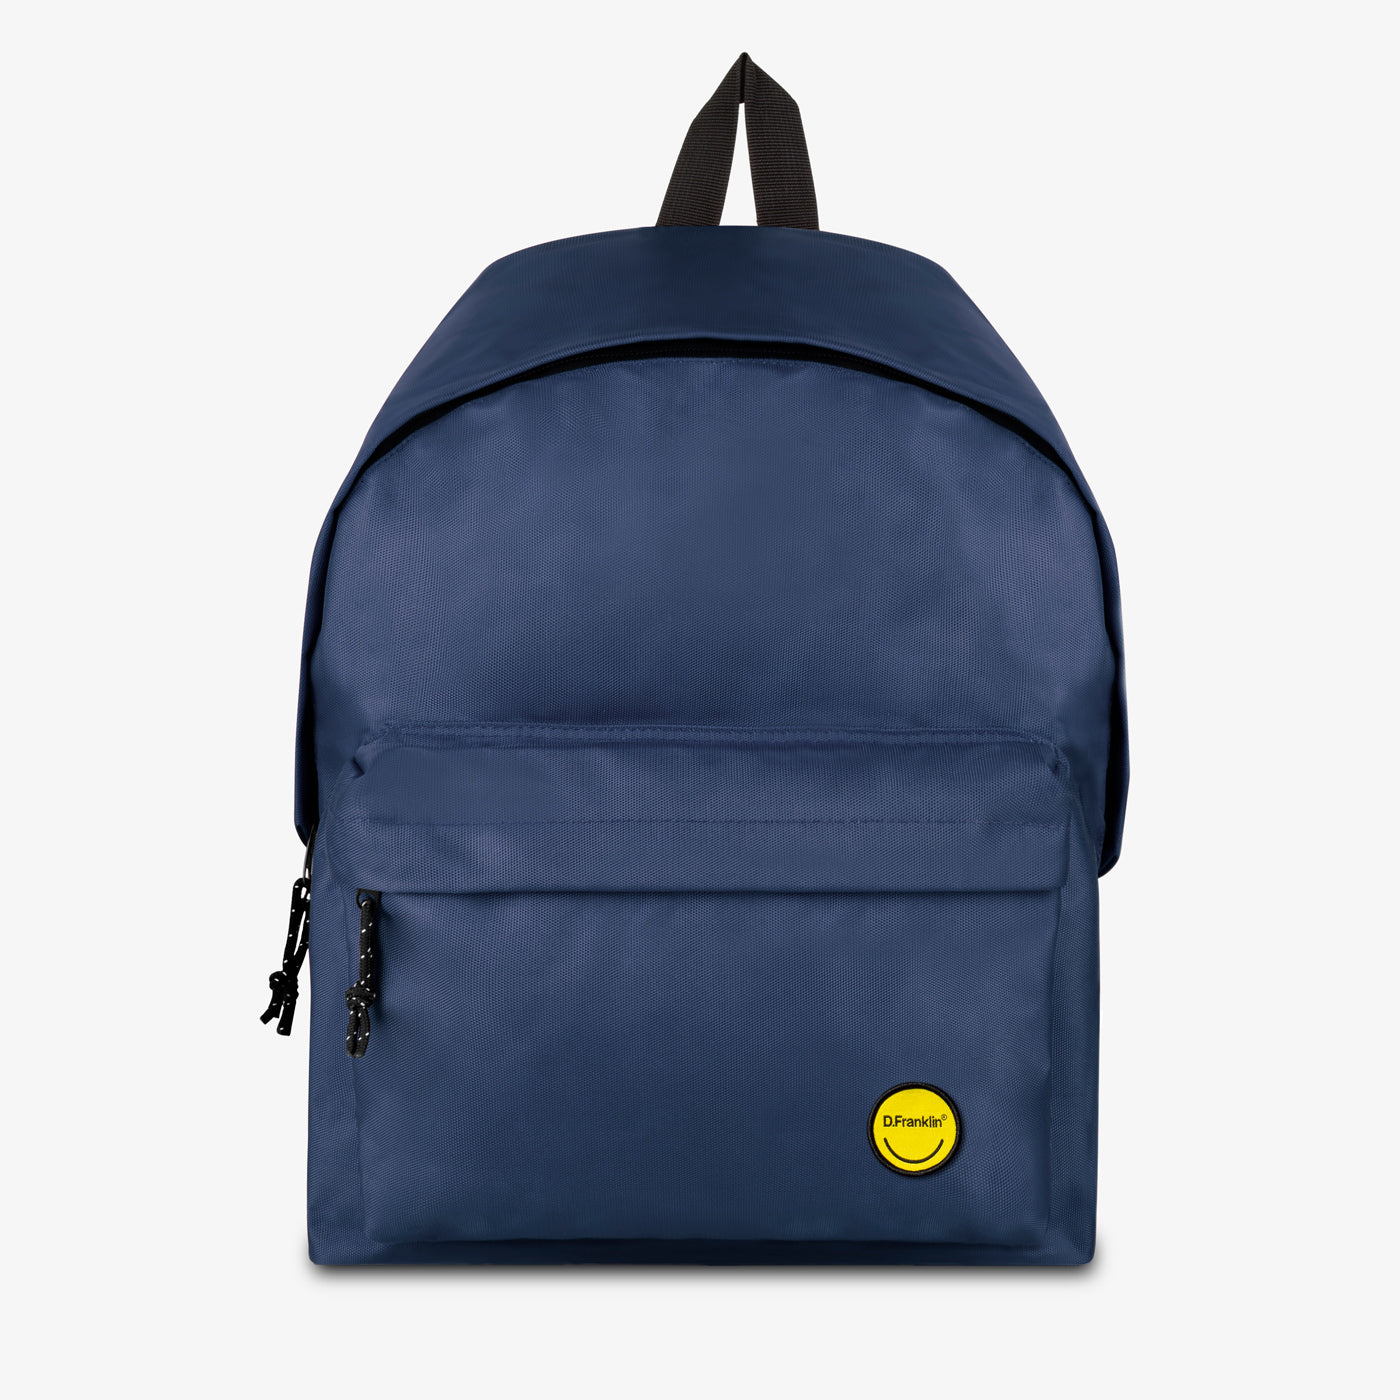 Basic Backpack Smiley Navy